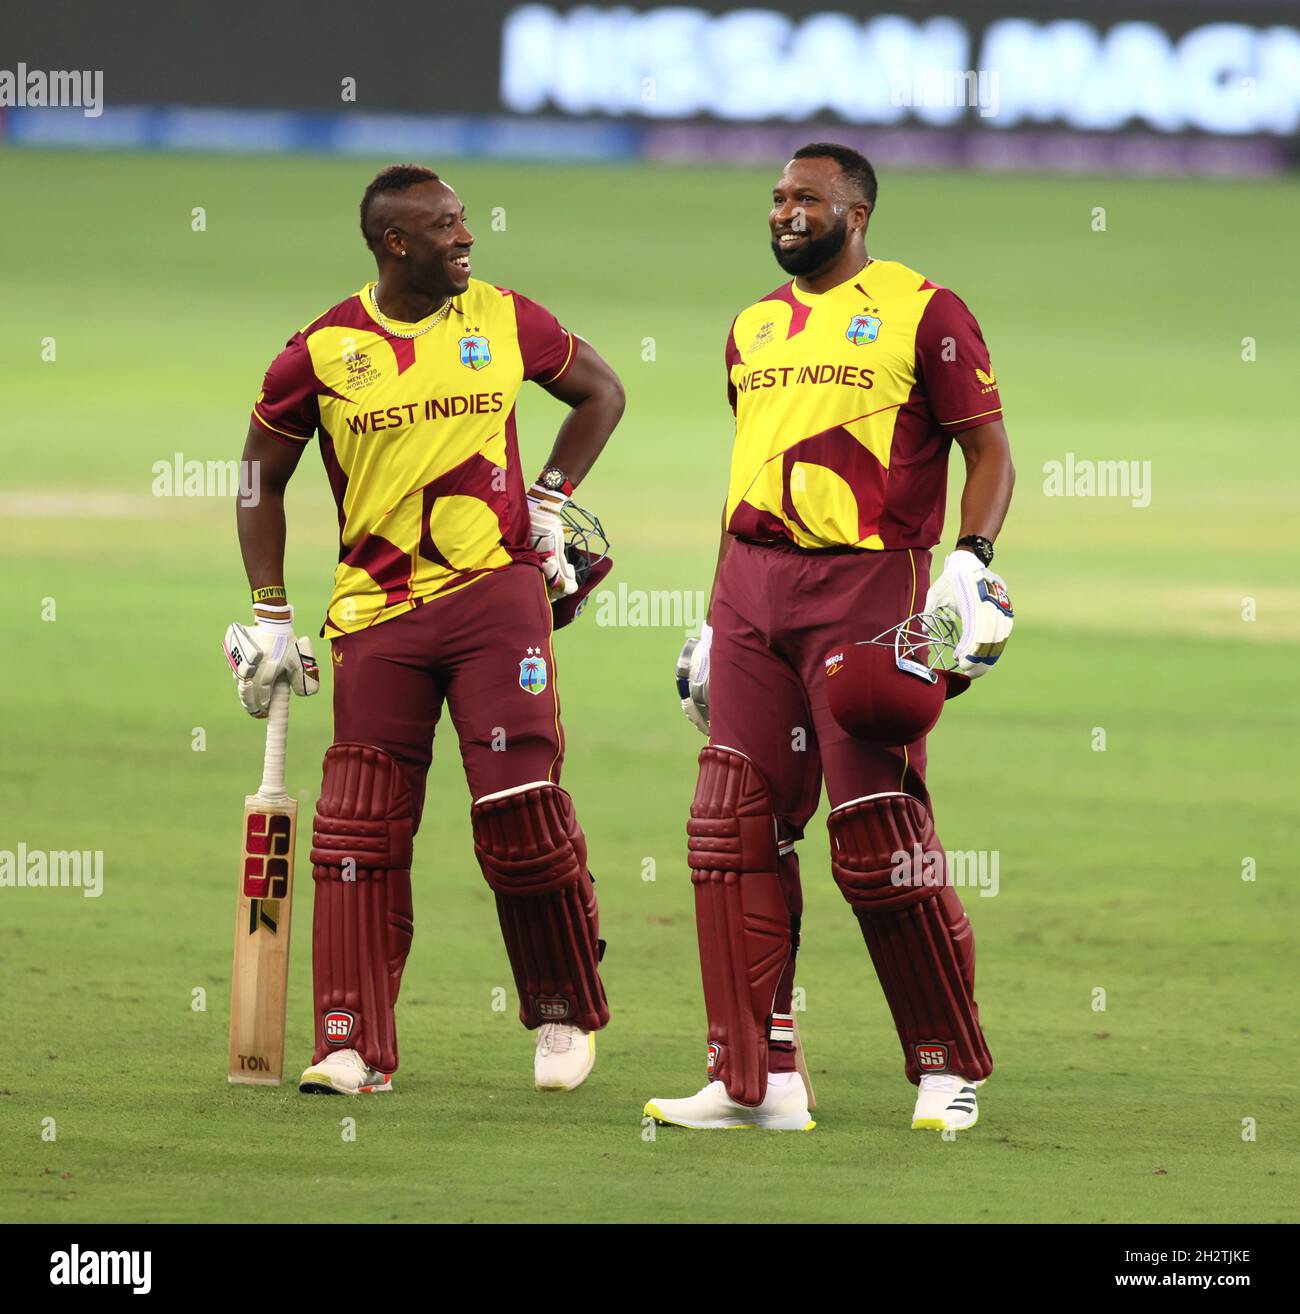 Dubai, October 23, 2021 - West Indian Batsmen Russel and Pollard in jubilant mood during the ICC T20 World cup in Dubai on Saturday Photo Seshadri SUKUMAR Credit Seshadri SUKUMAR/Alamy Live News